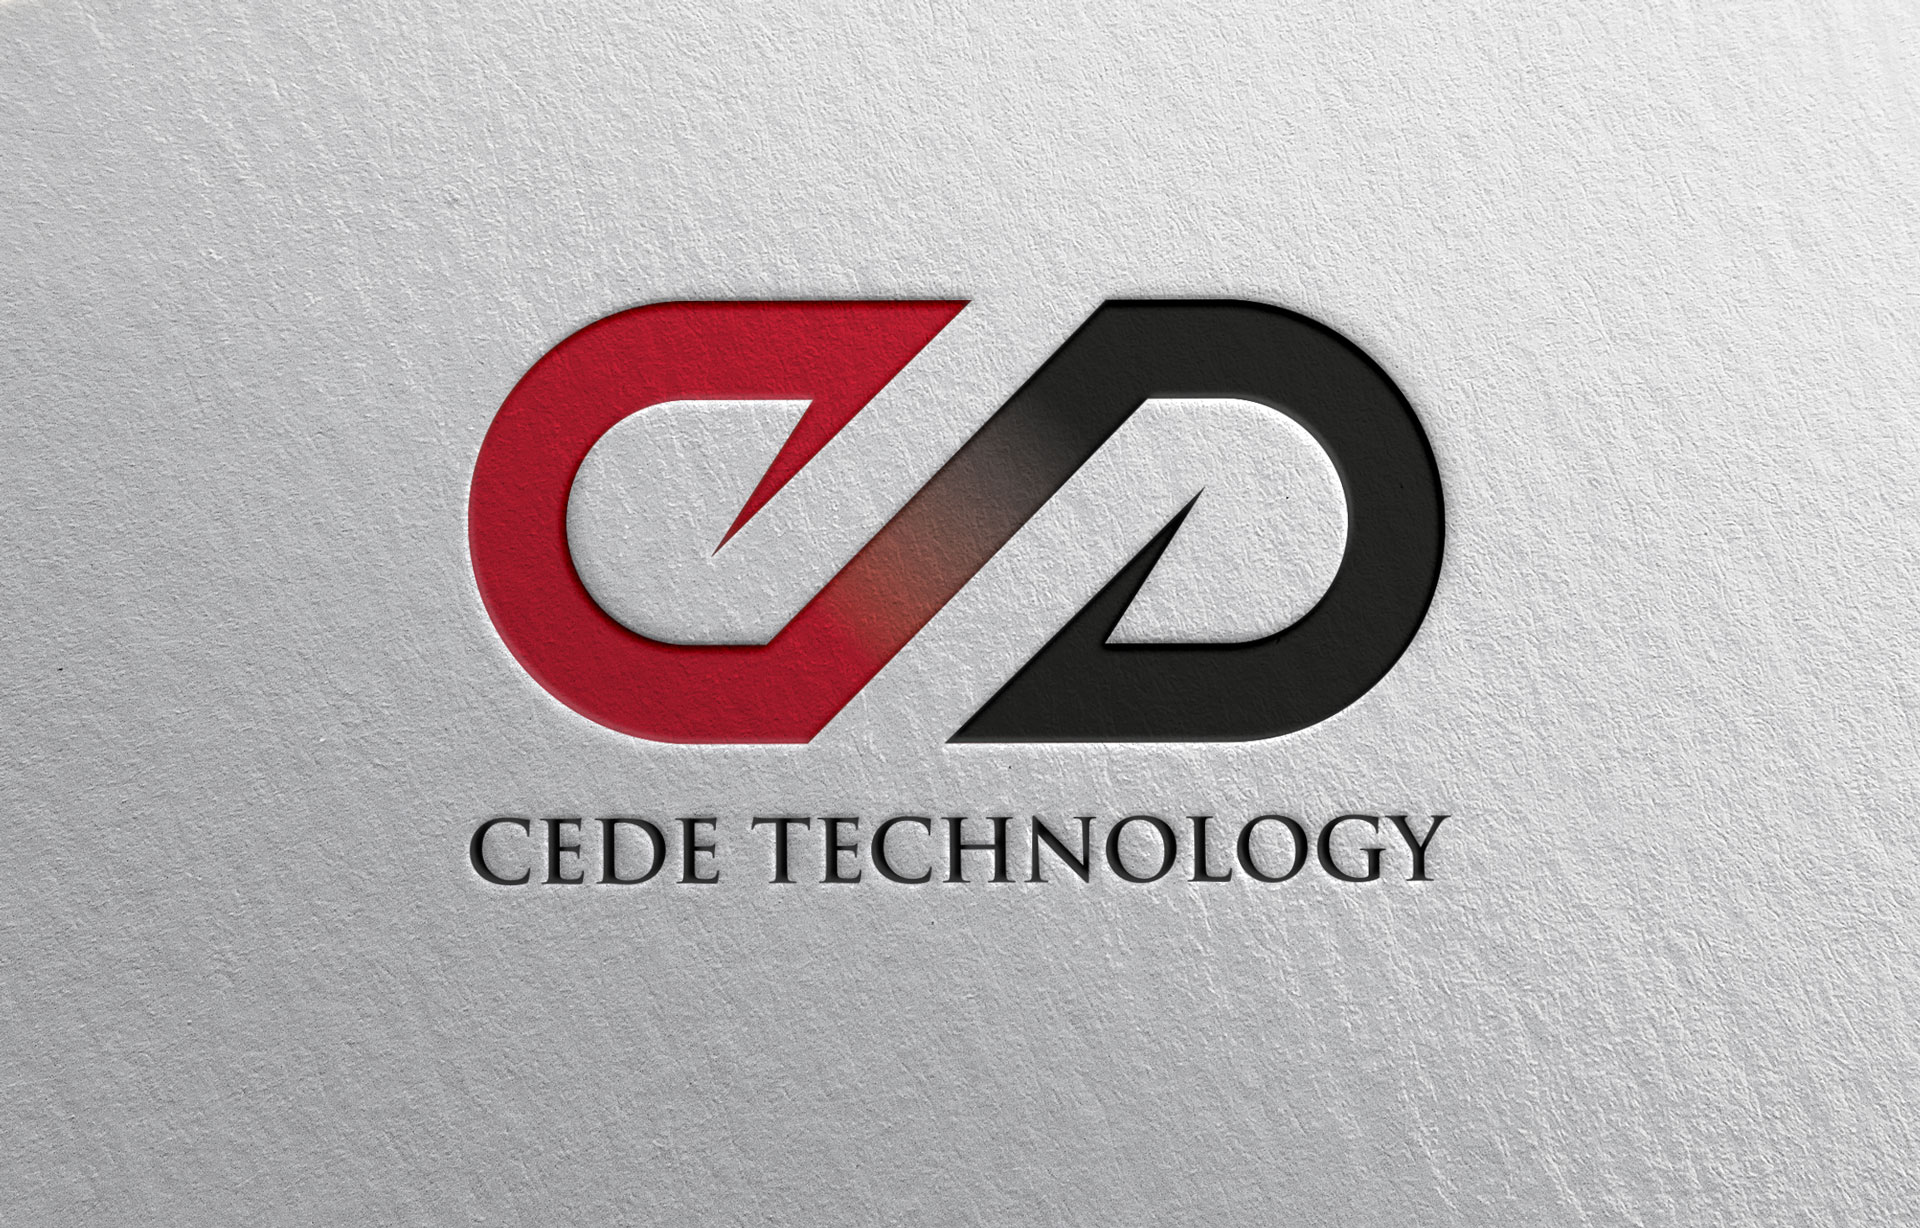 Cede Technology